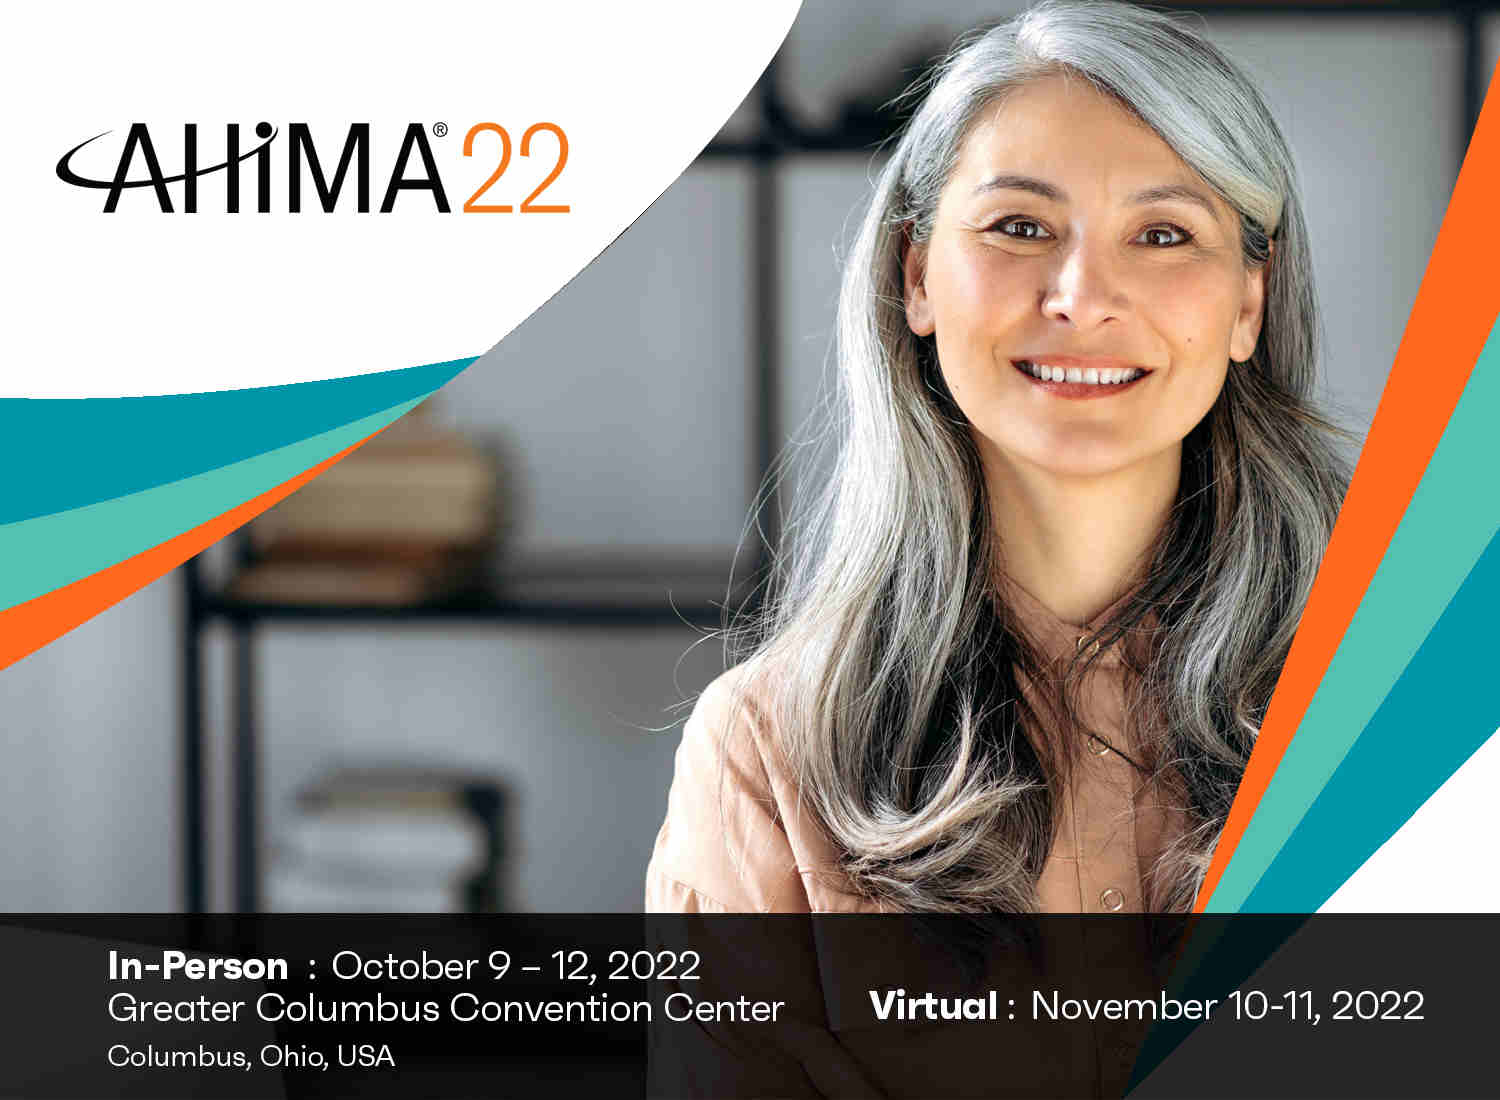 AHIMA22 Global Conference